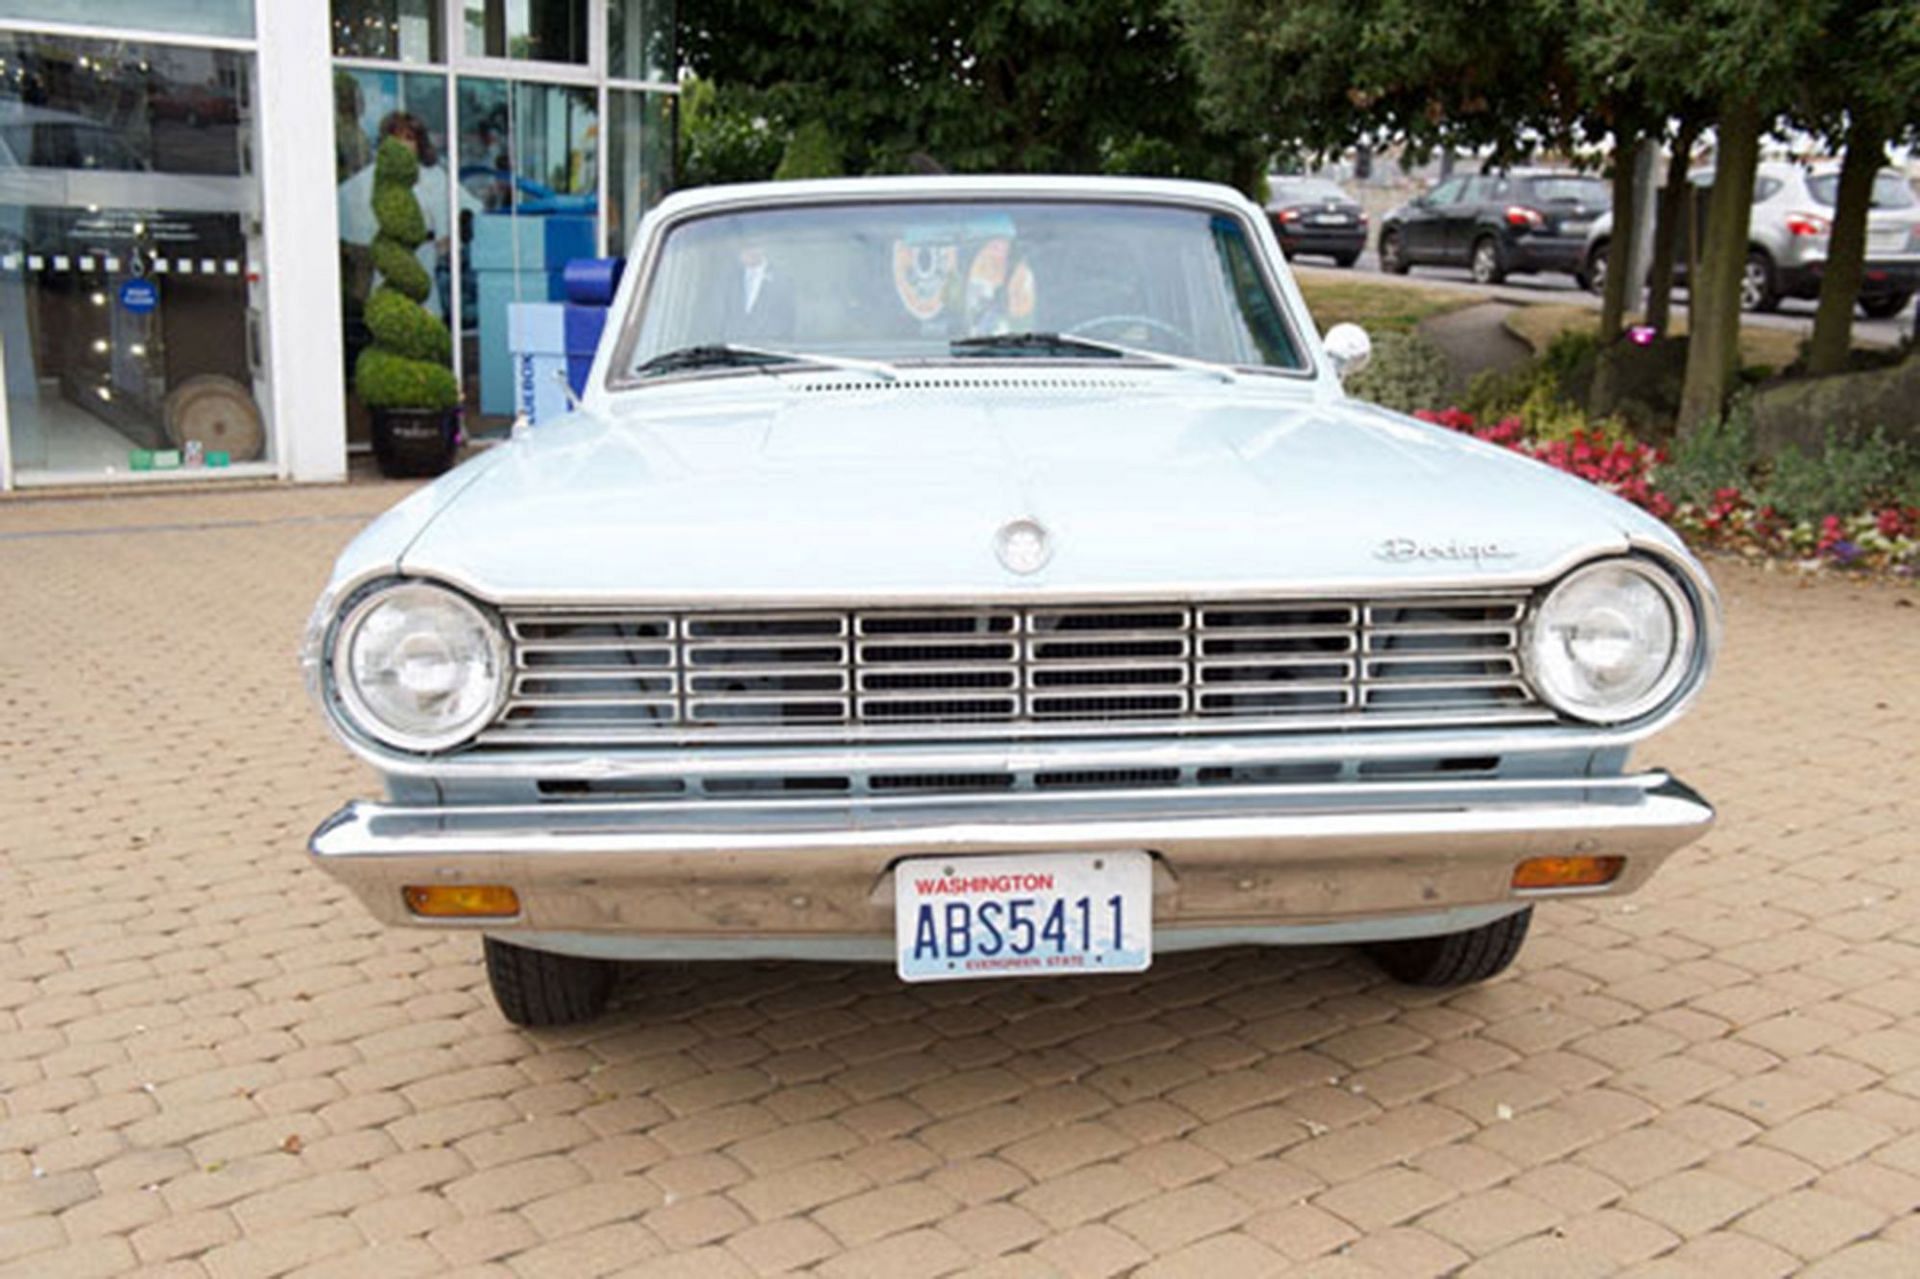 Also up for auction: Kurt&#039;s 1965 Dodge Dart. (Image via JuliensAuctions.com)